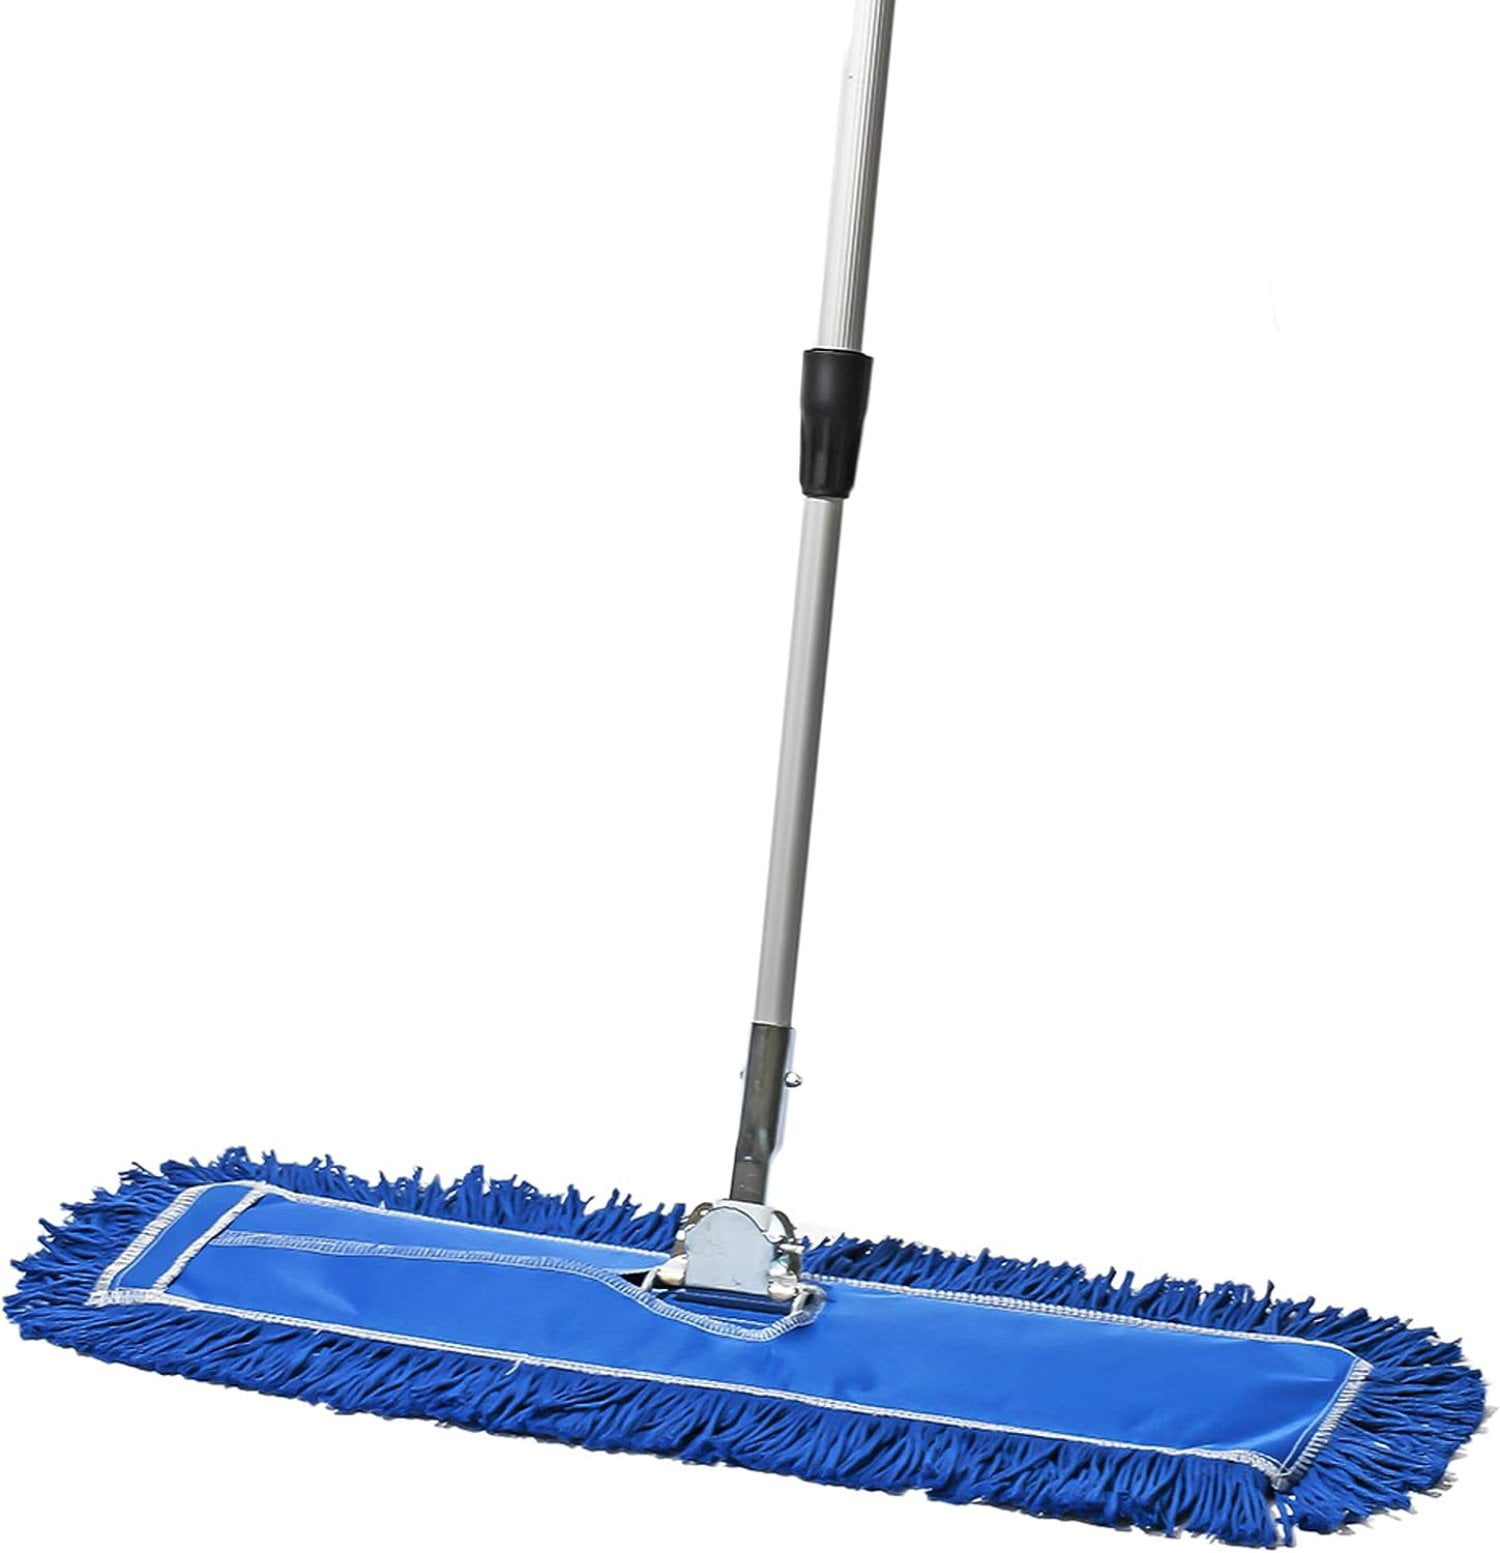 Tidy Tools Industrial Dust Mop for Floor Cleaning, Floor Mop Extendable  Metal Handle, 24 Inch Cotton/Nylon Head, Blue